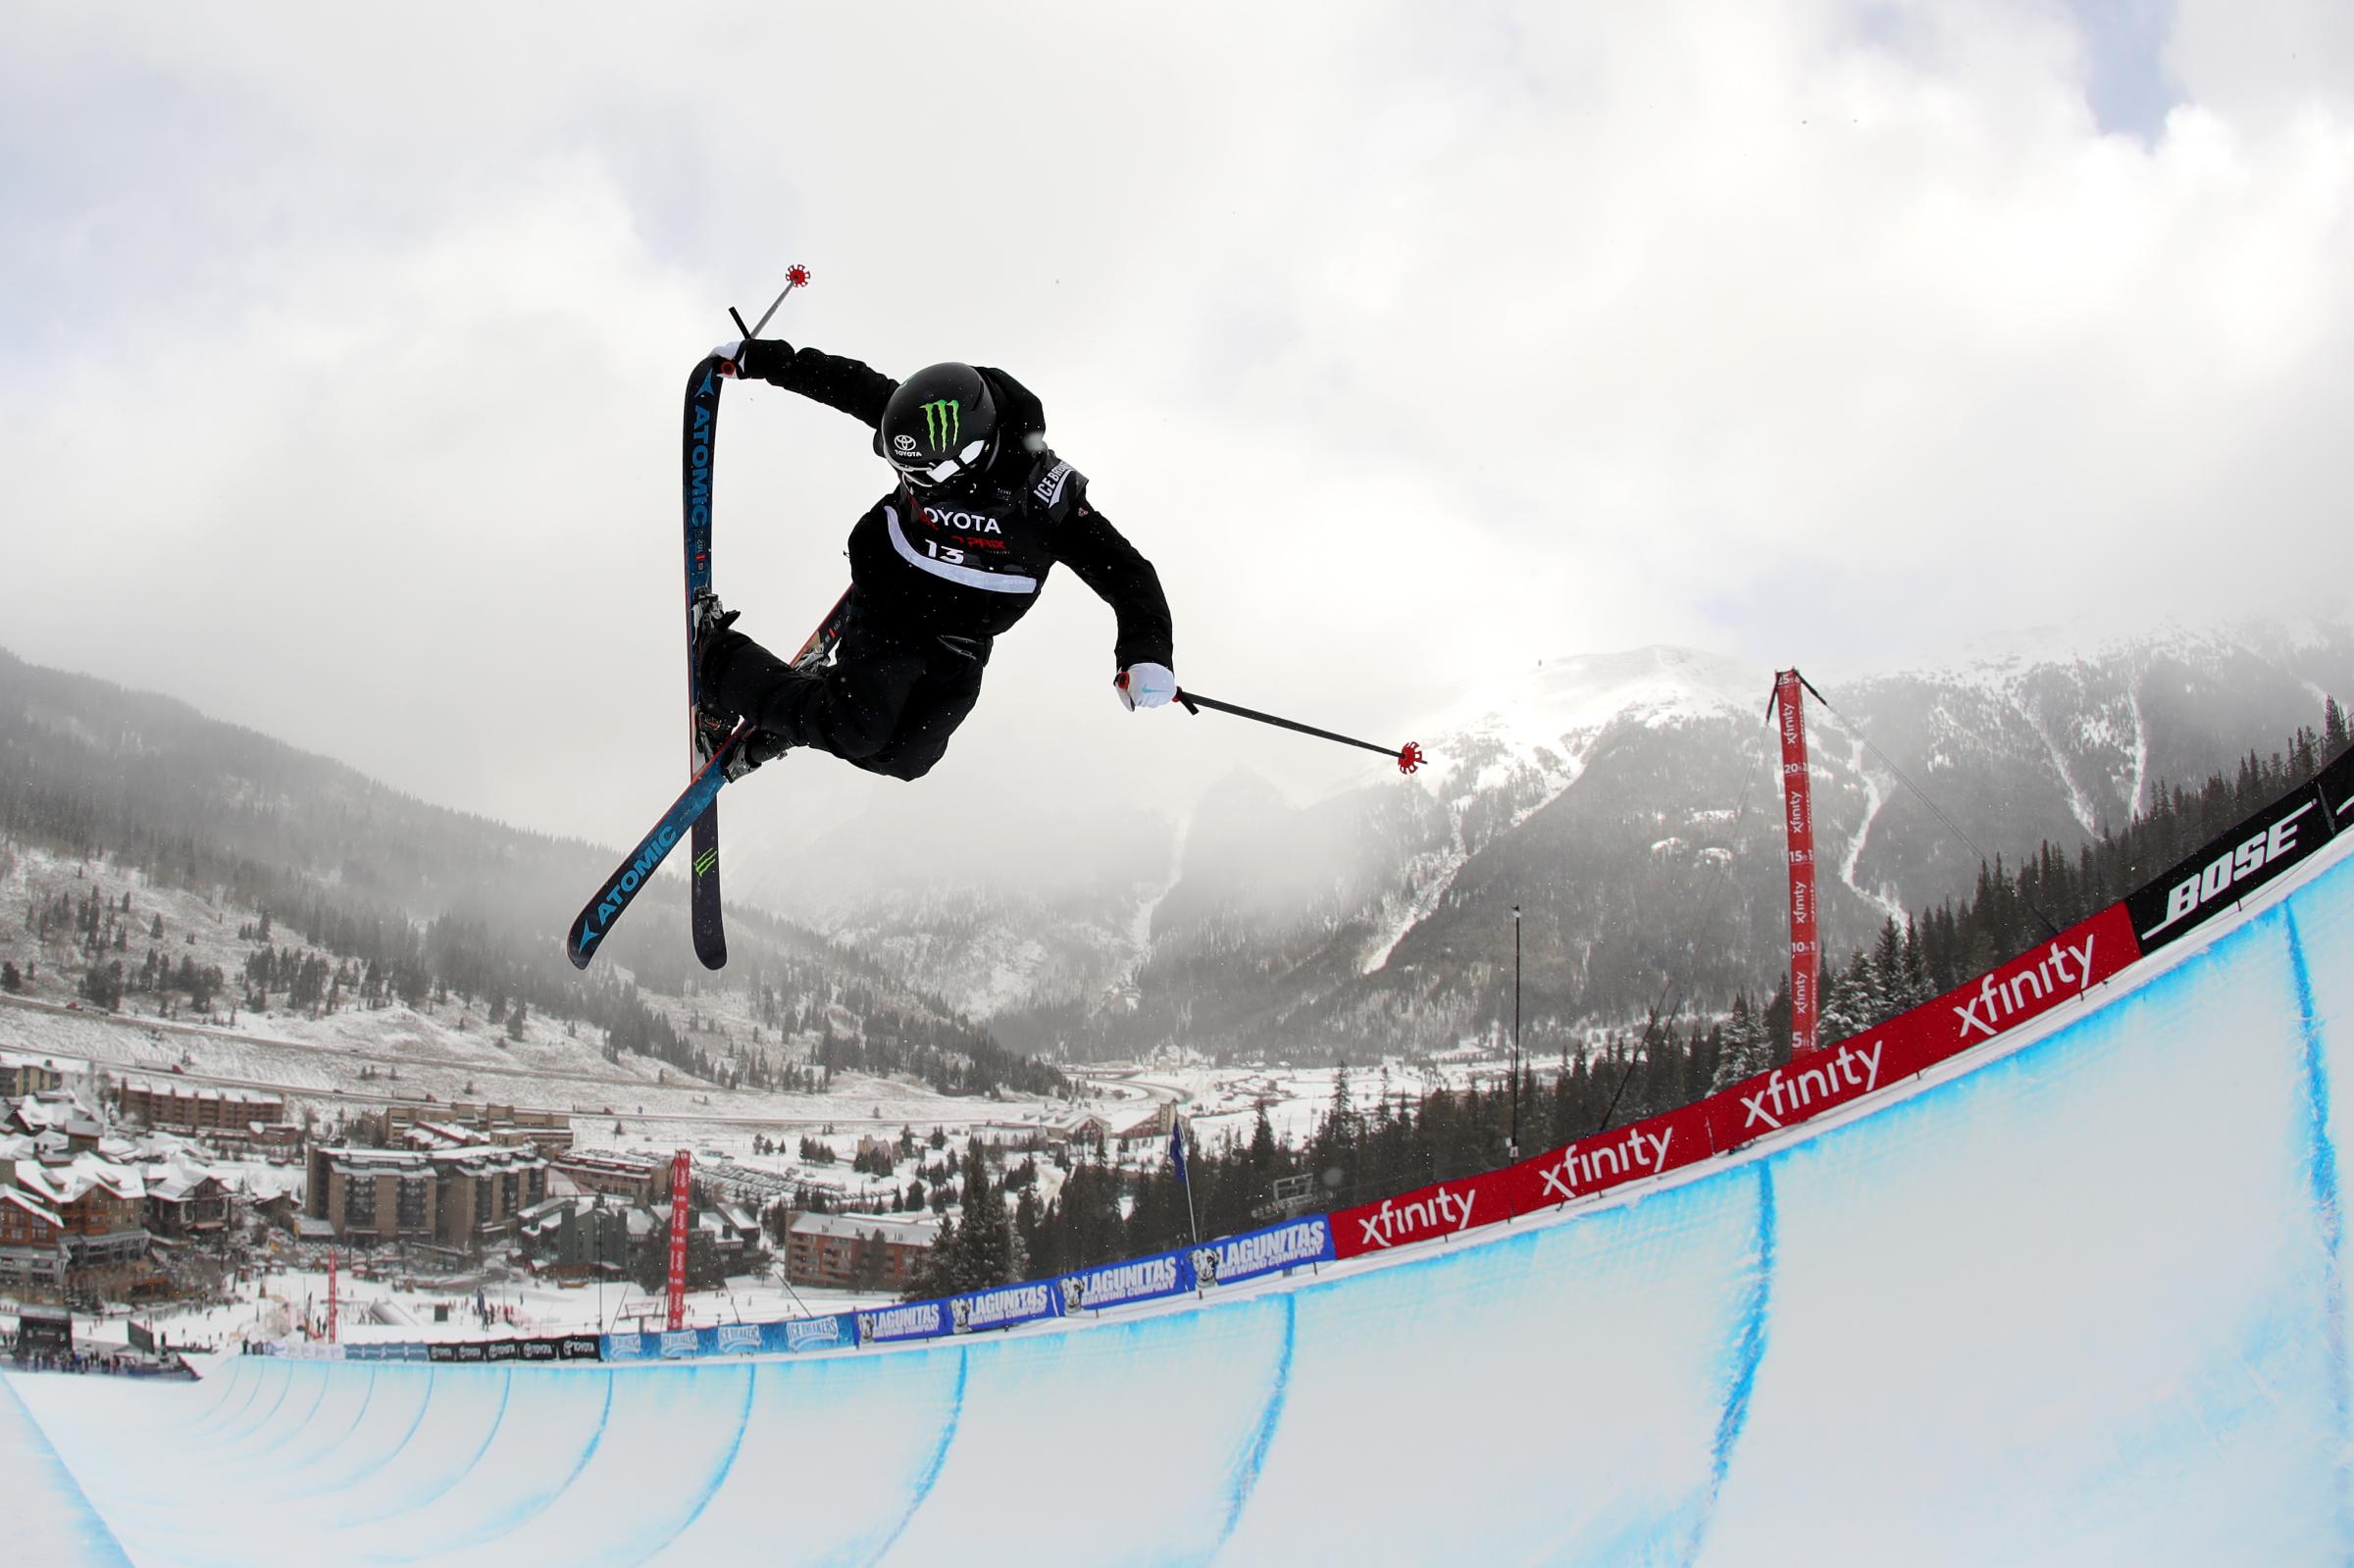 2017 U.S. Snowboarding Grand Prix at Copper - Halfpipe Skiing Qualification